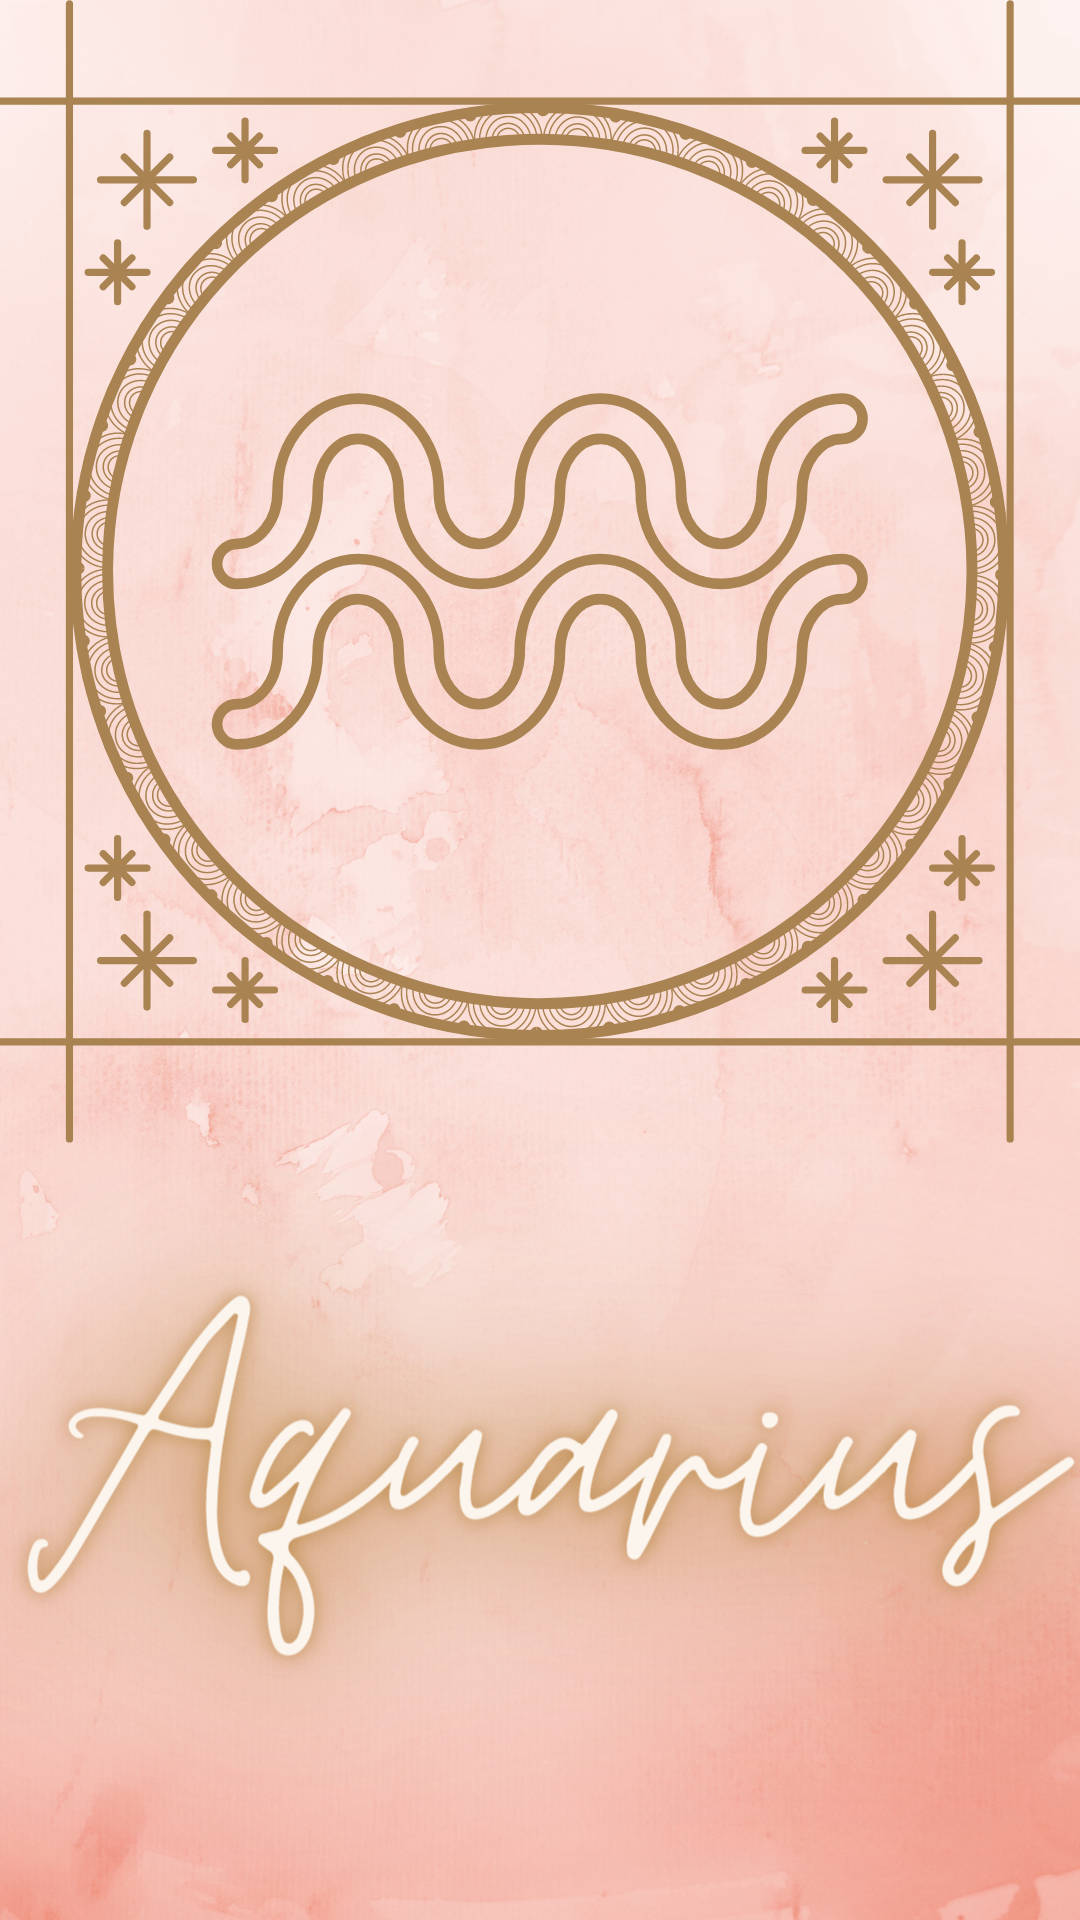 Astrological Aquarius Zodiac Sign Wallpaper